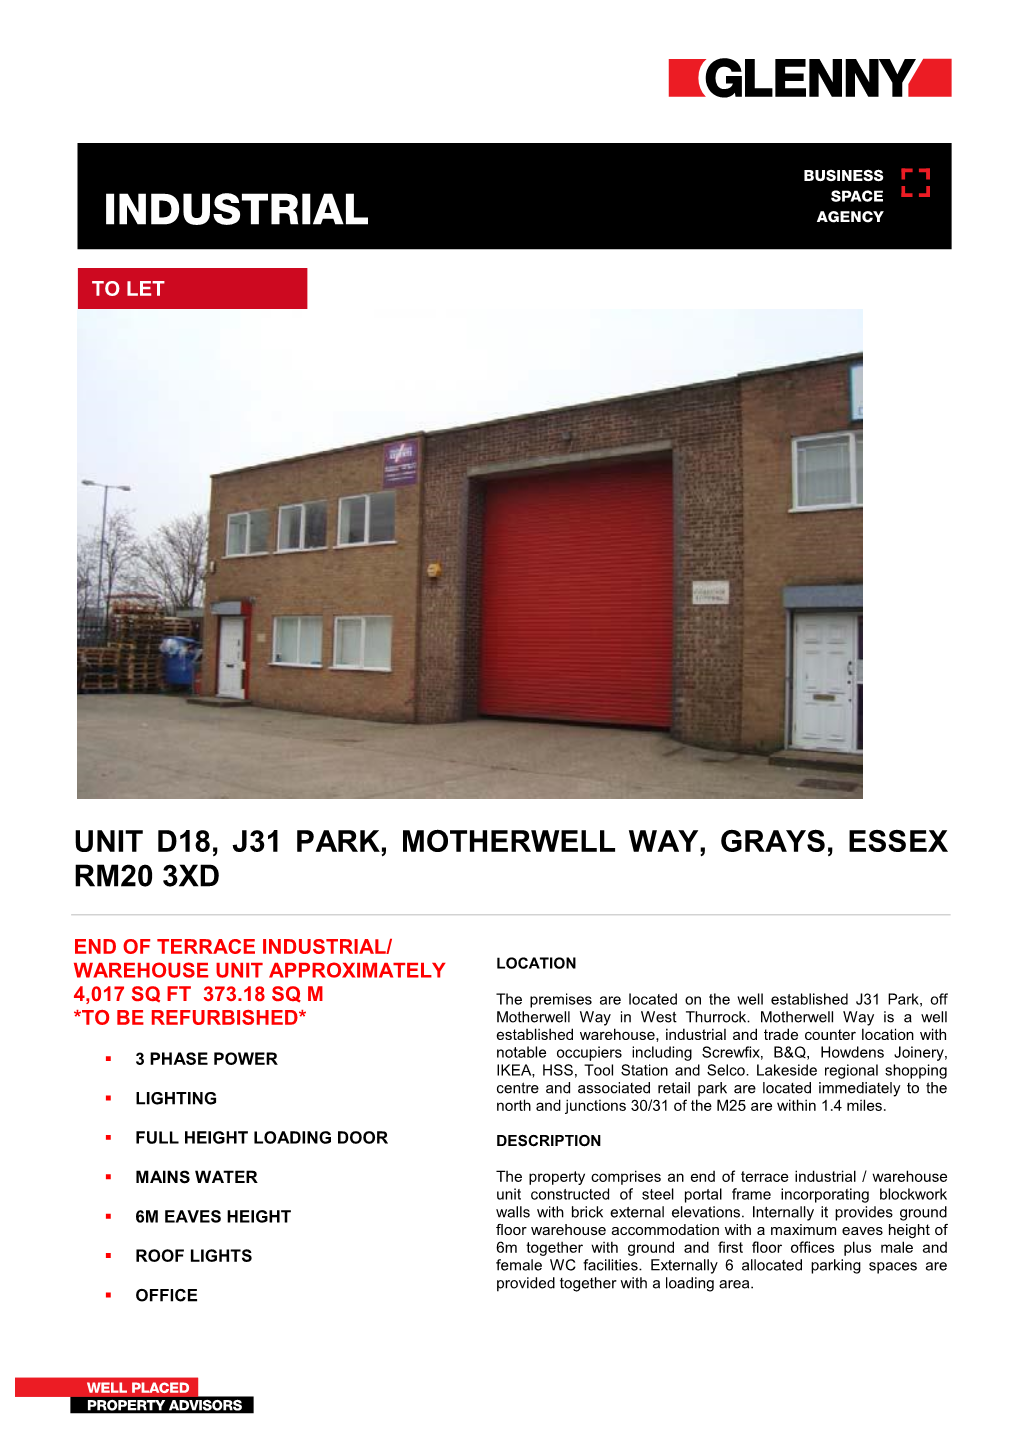 Unit D18, J31 Park, Motherwell Way, Grays, Essex Rm20 3Xd